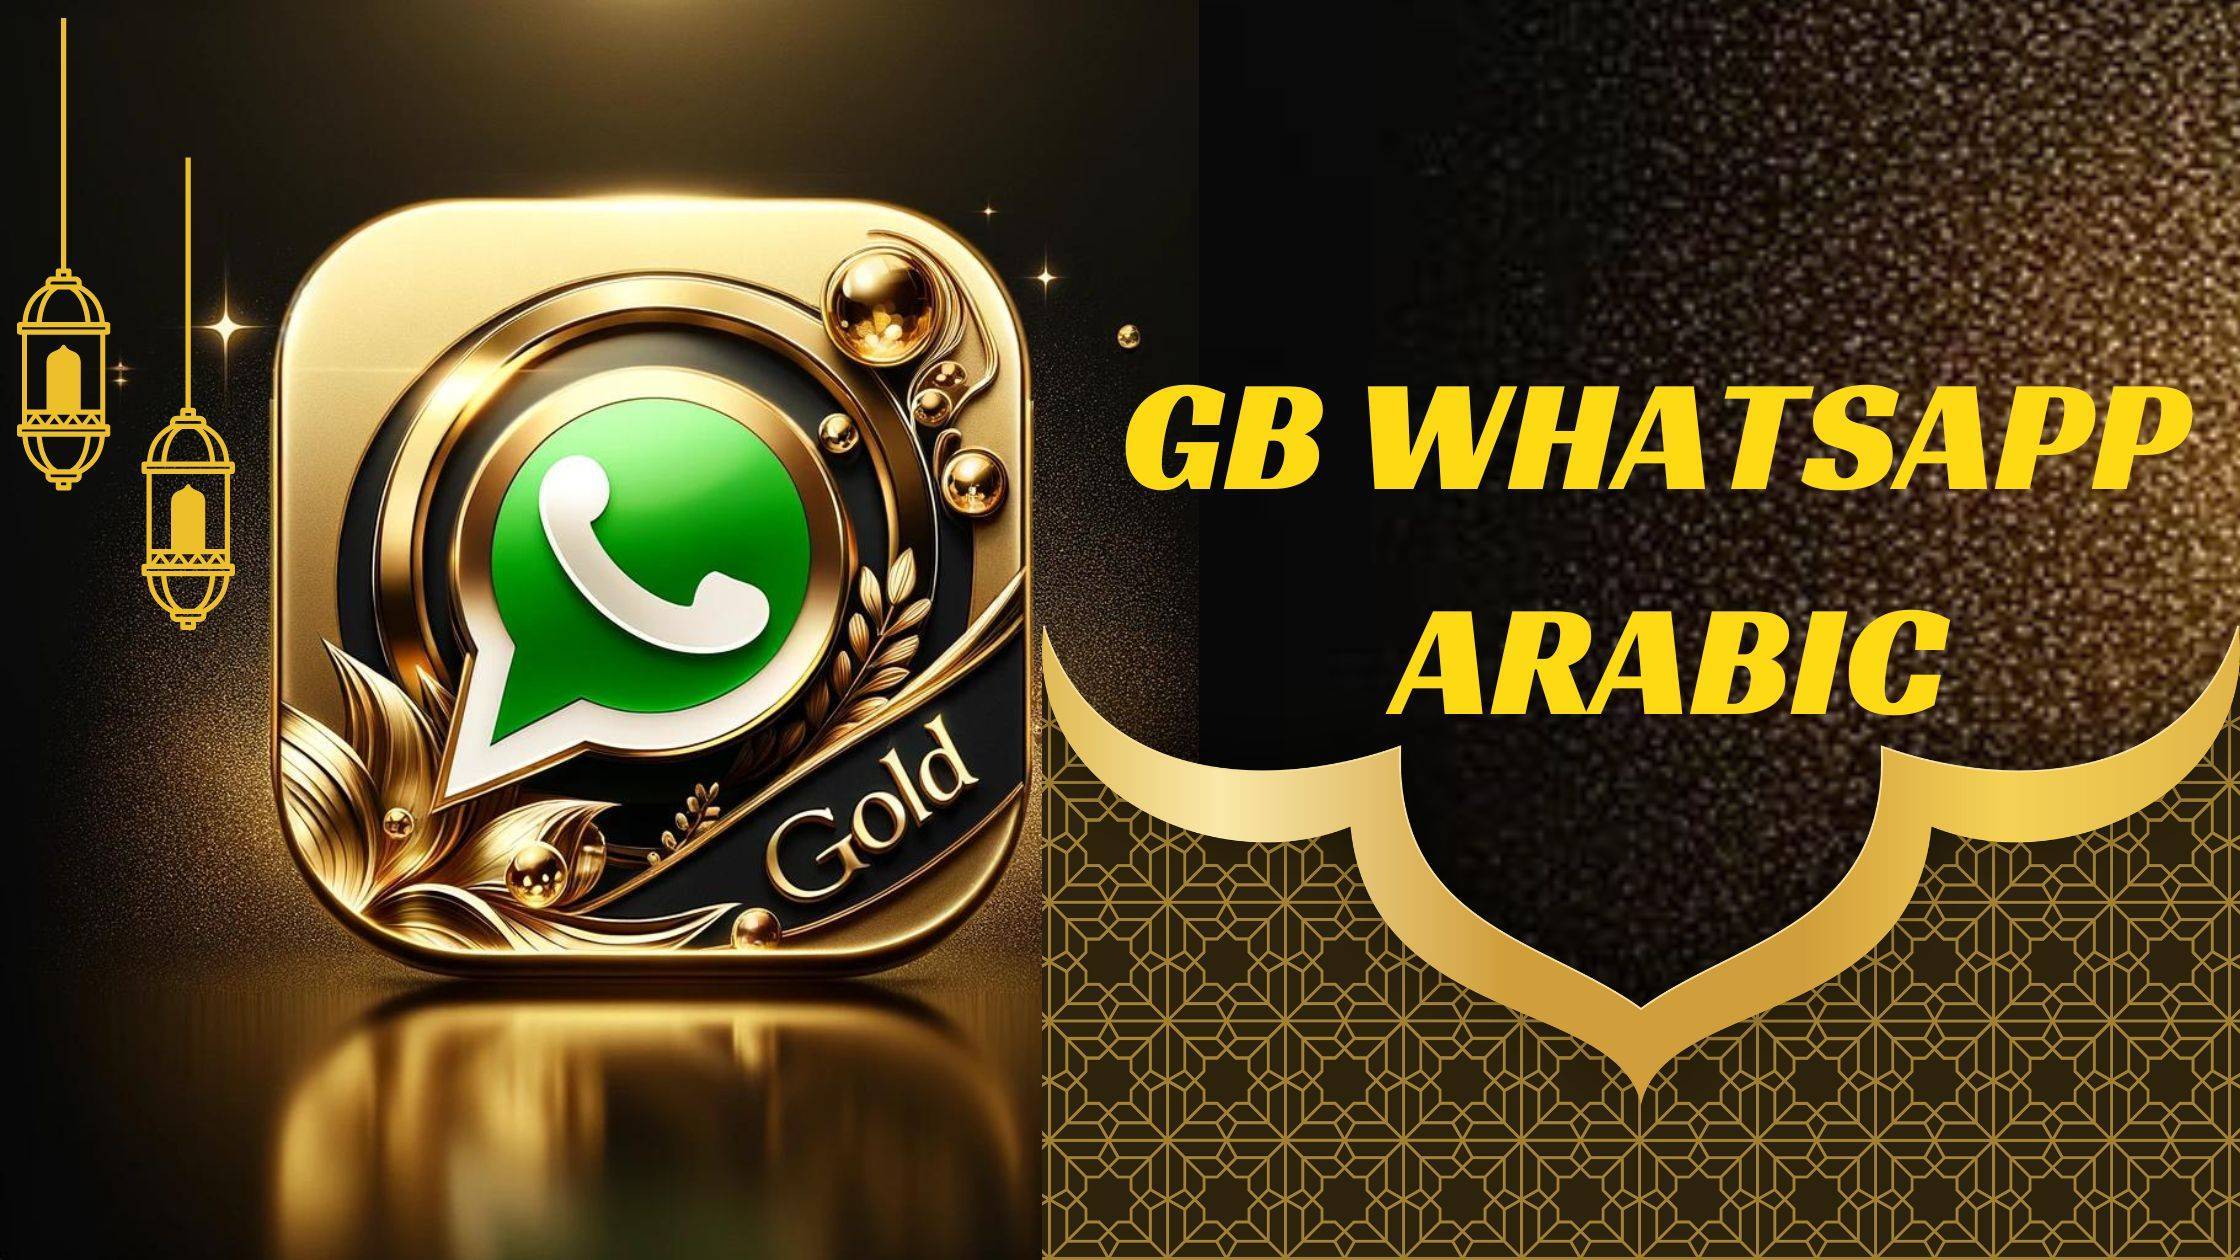 GB WhatsApp Arabic